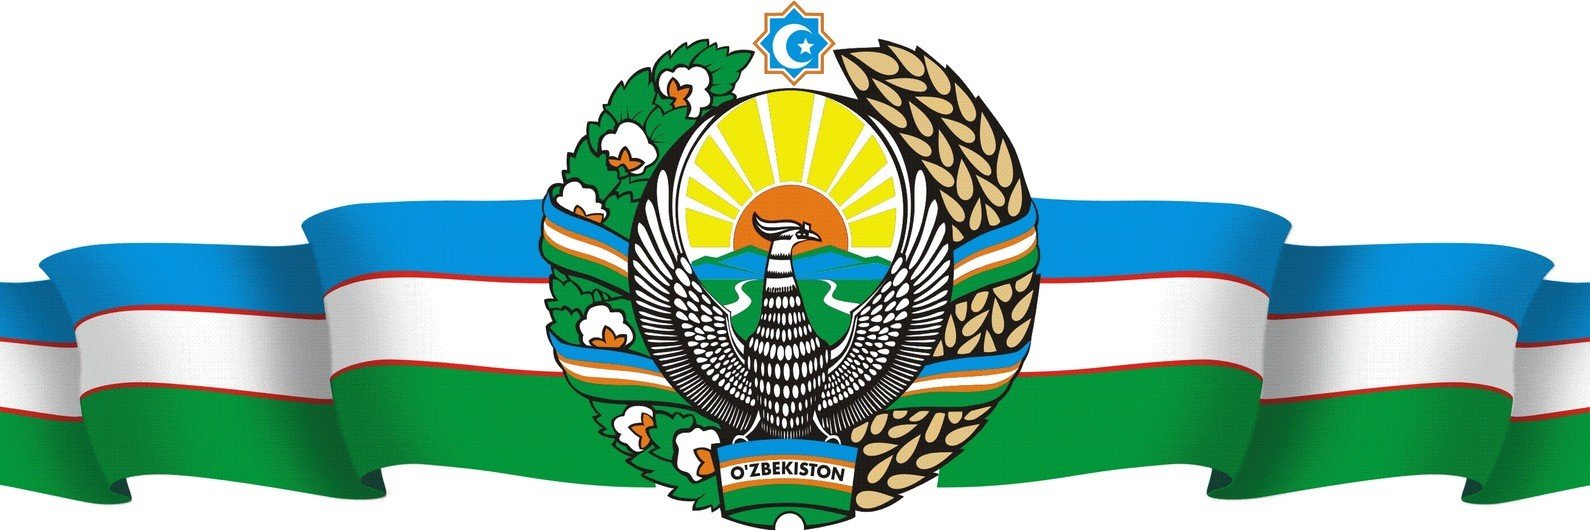 The state emblem of the Republic of Uzbekistan